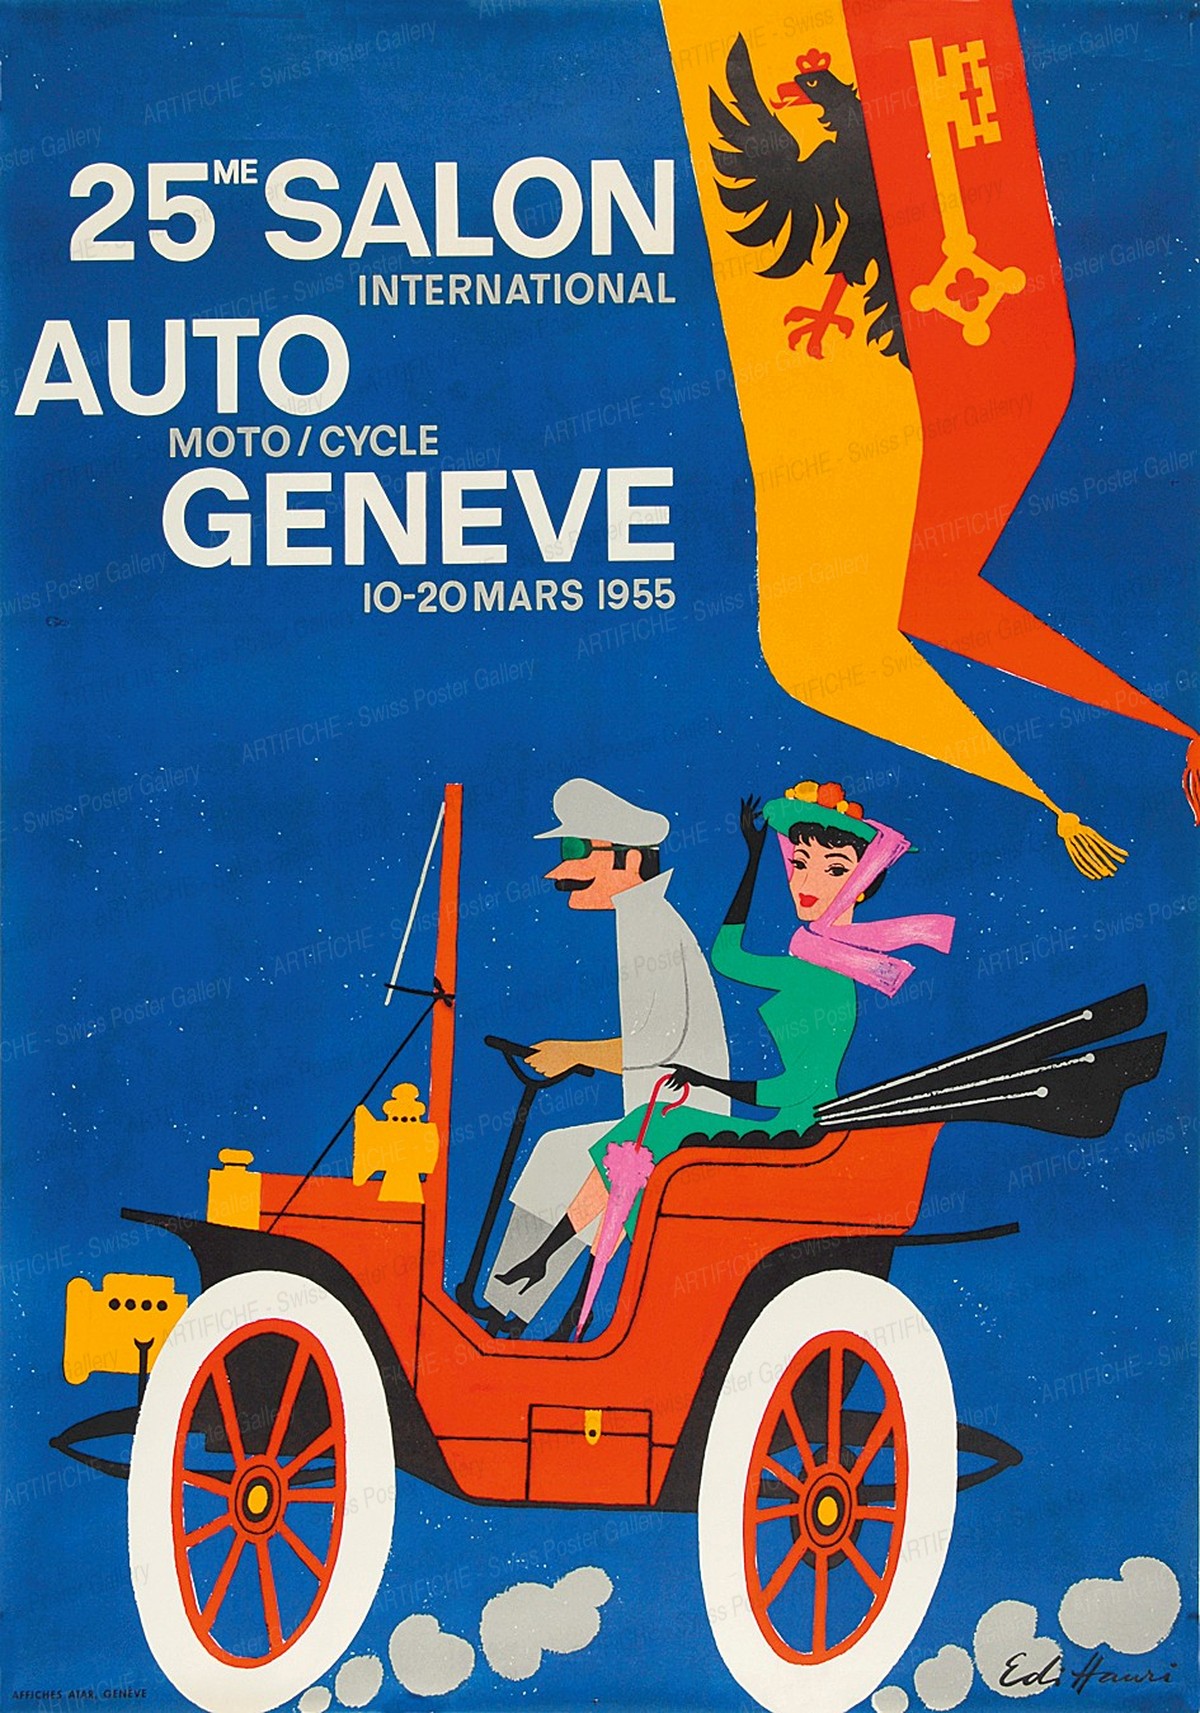 25me SALON International AUTO Moto / Cycle GENEVE 10 – 20 Mars 1955, Edi Hauri